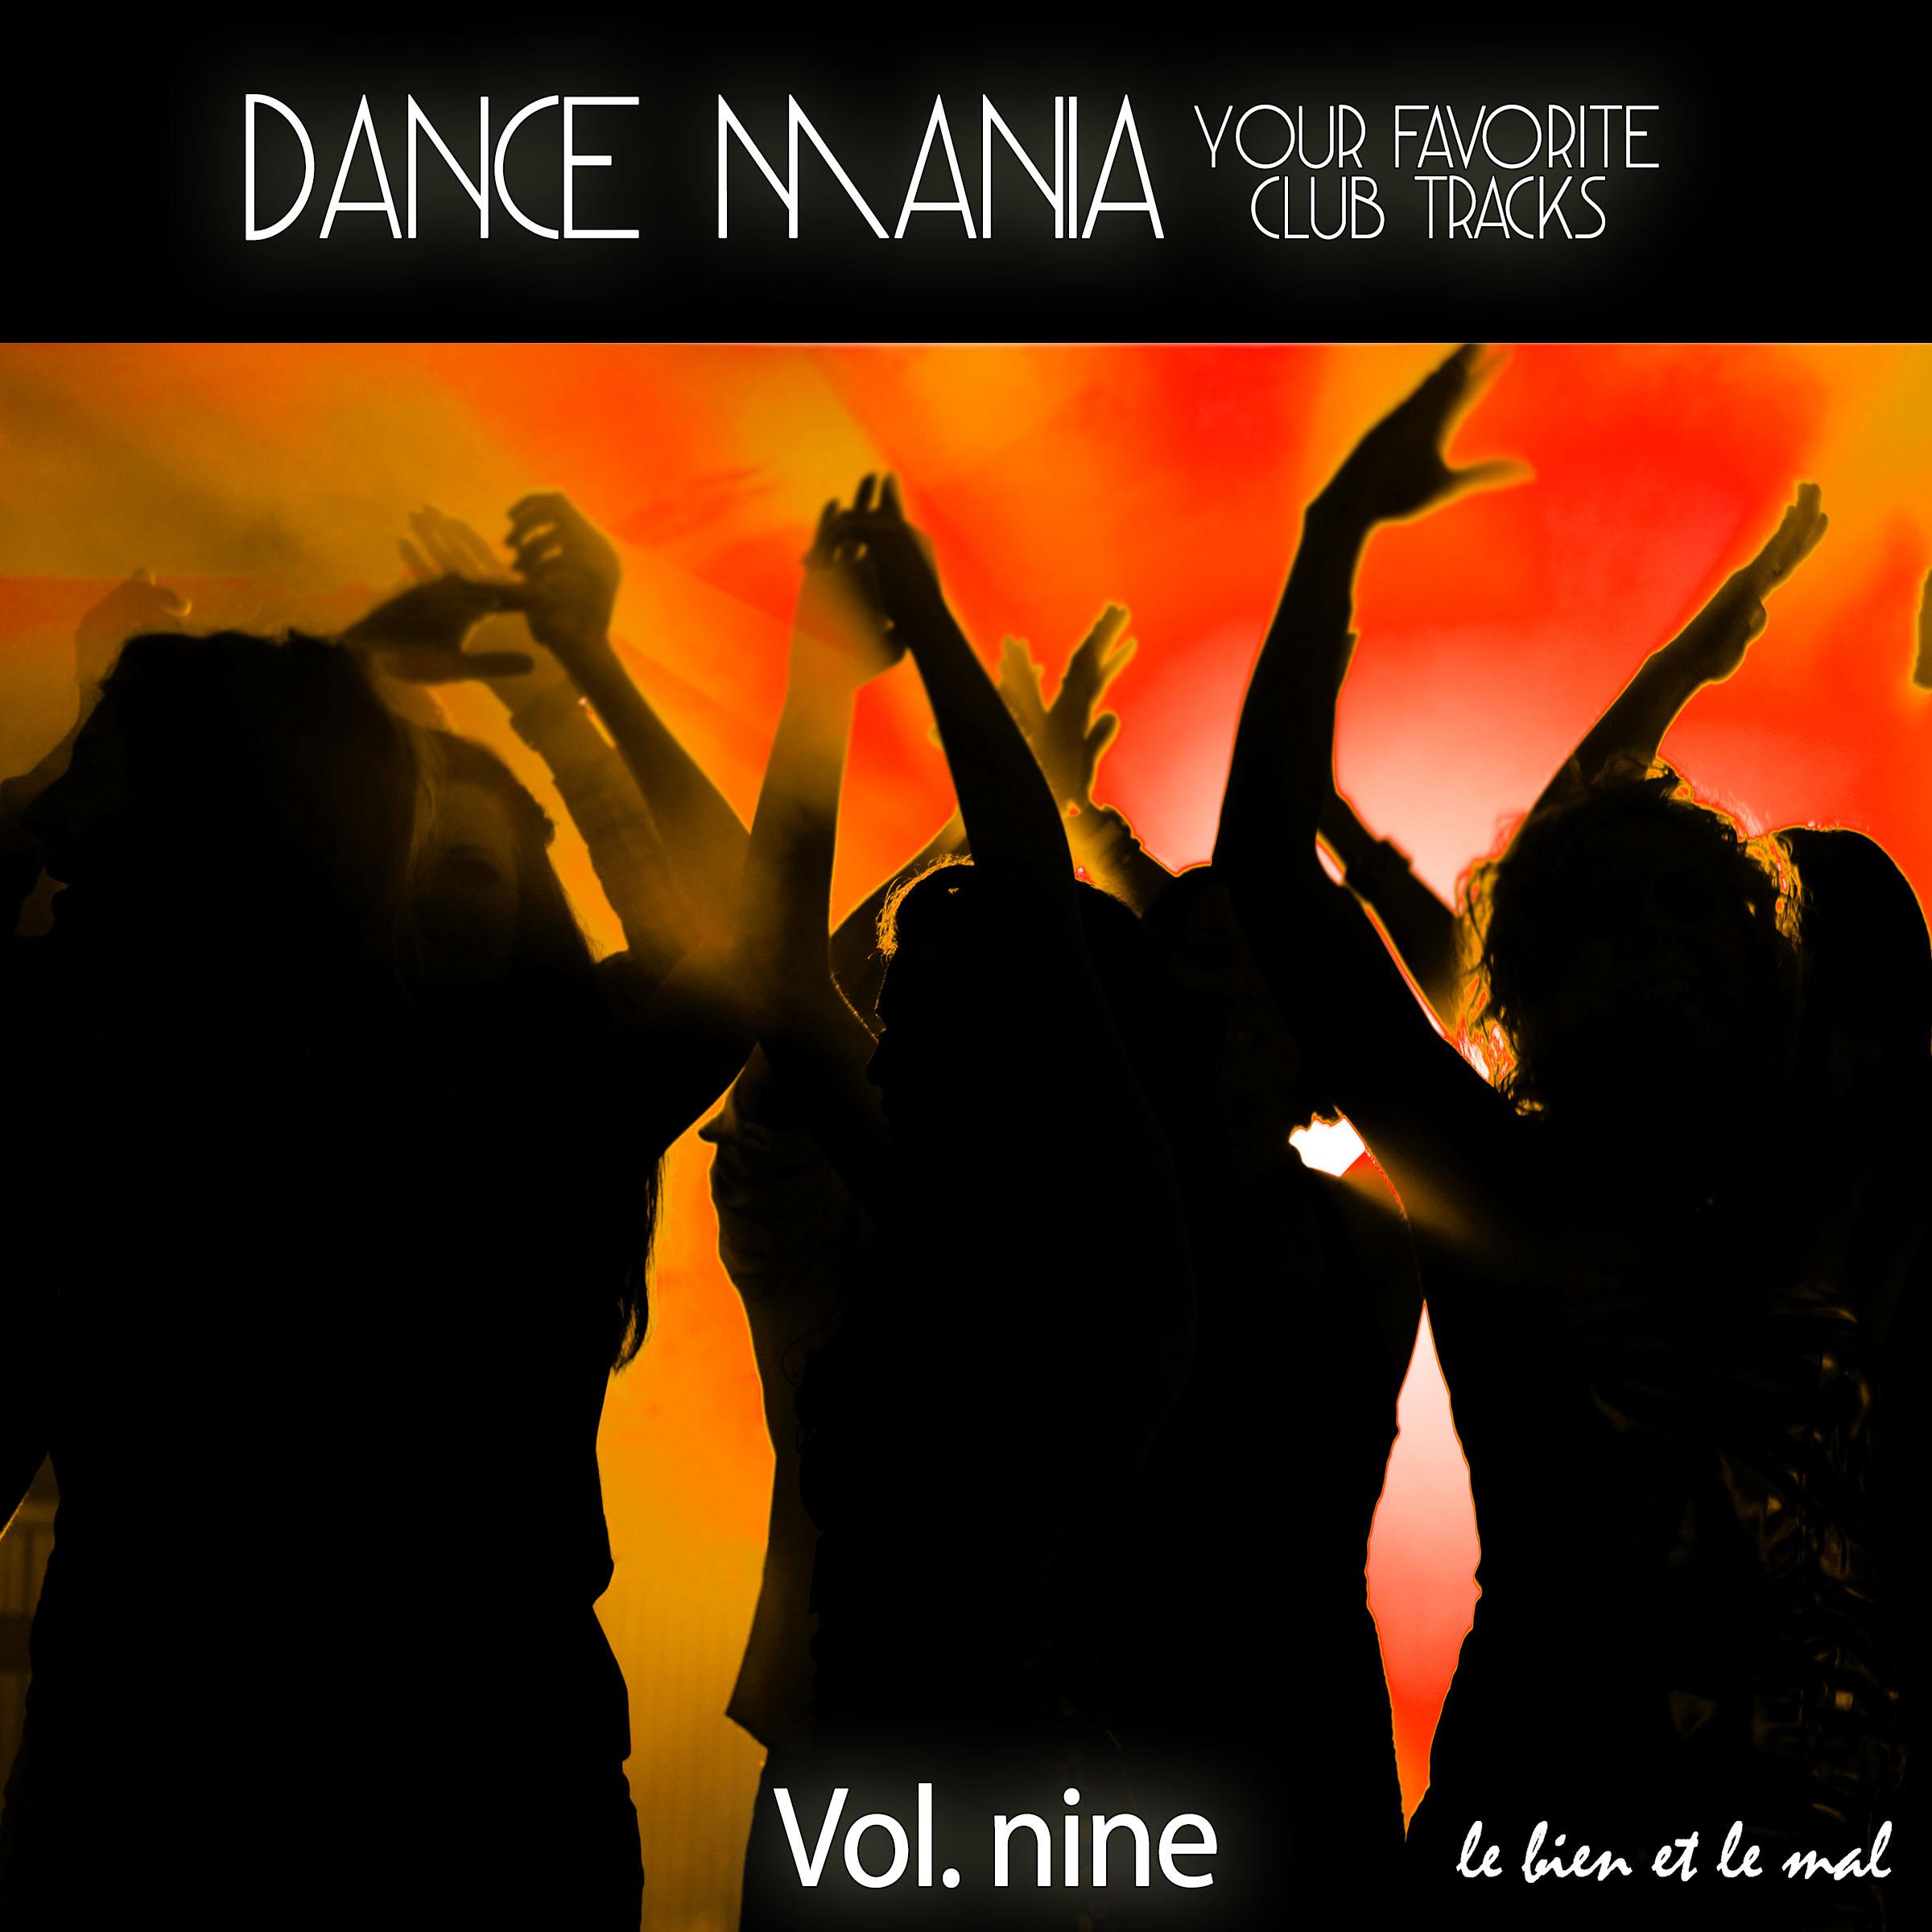 Dance Mania - Your Favorite Club Tracks, Vol. 9